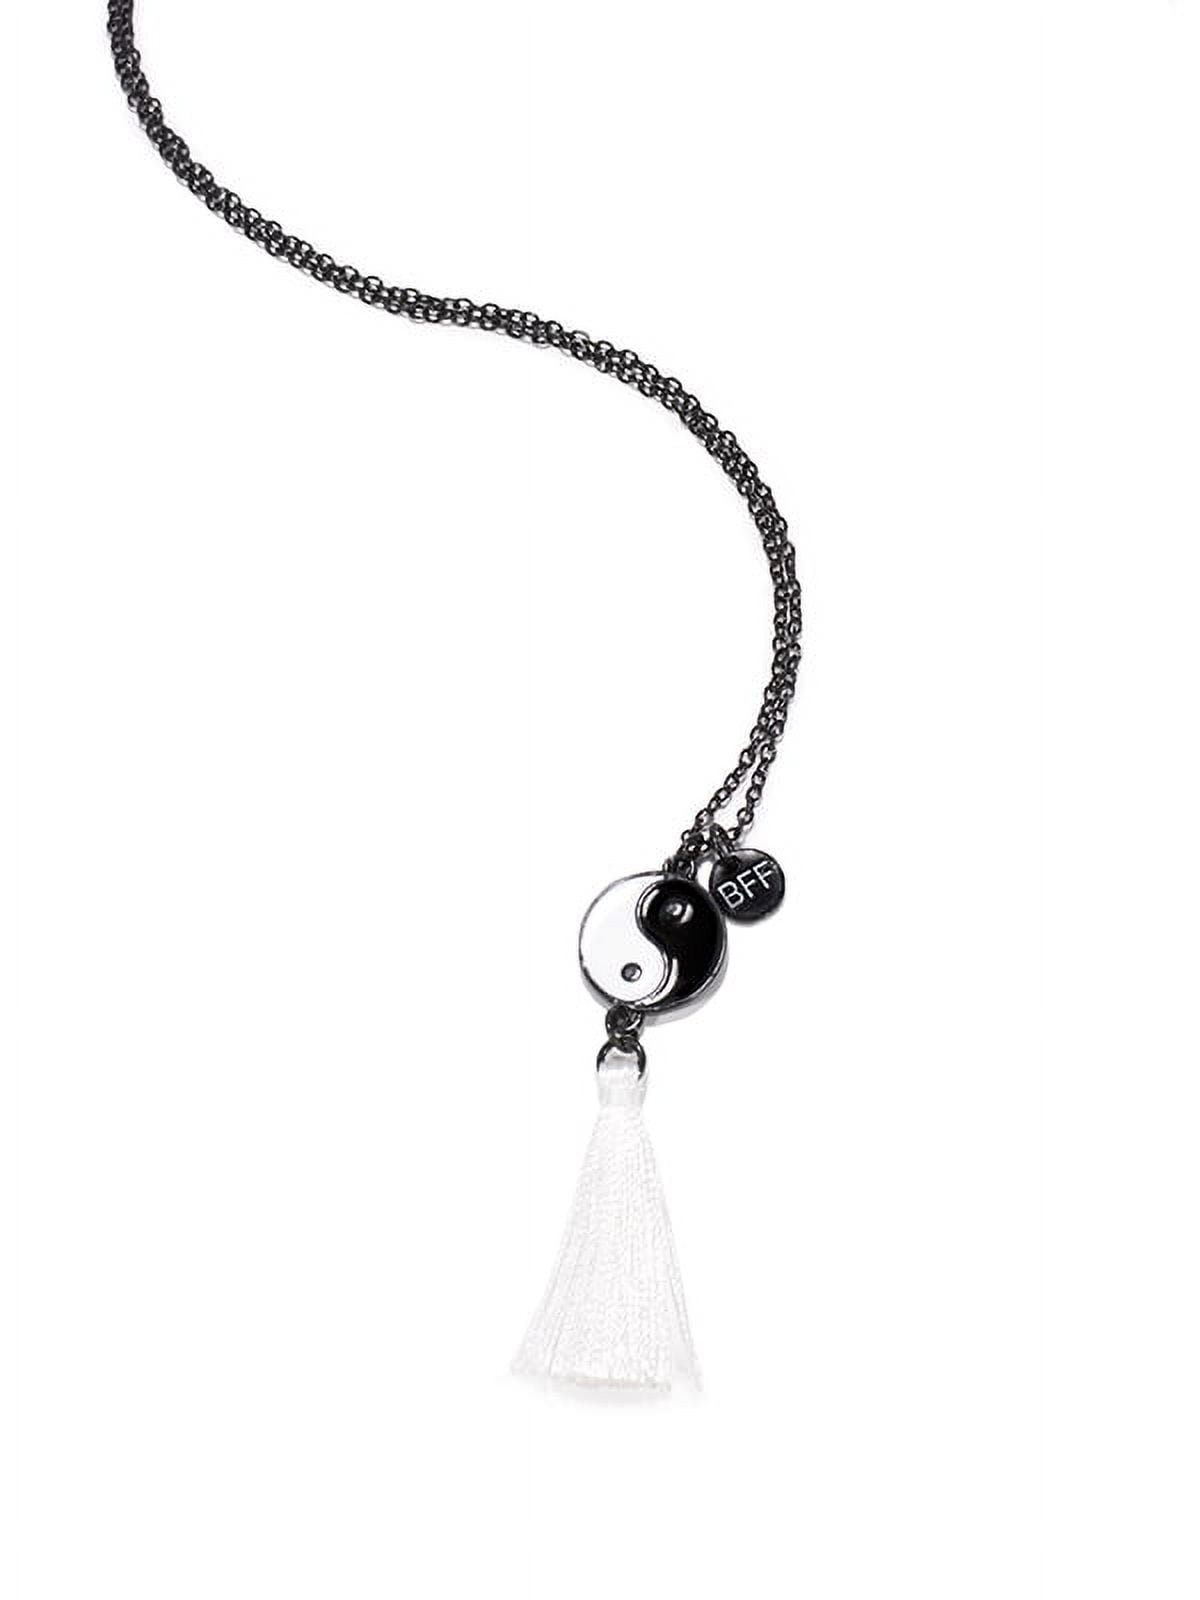 Tahtian Pearl Necklaces | Handmade in the UK | Pearl Gallery Pearl Gallery